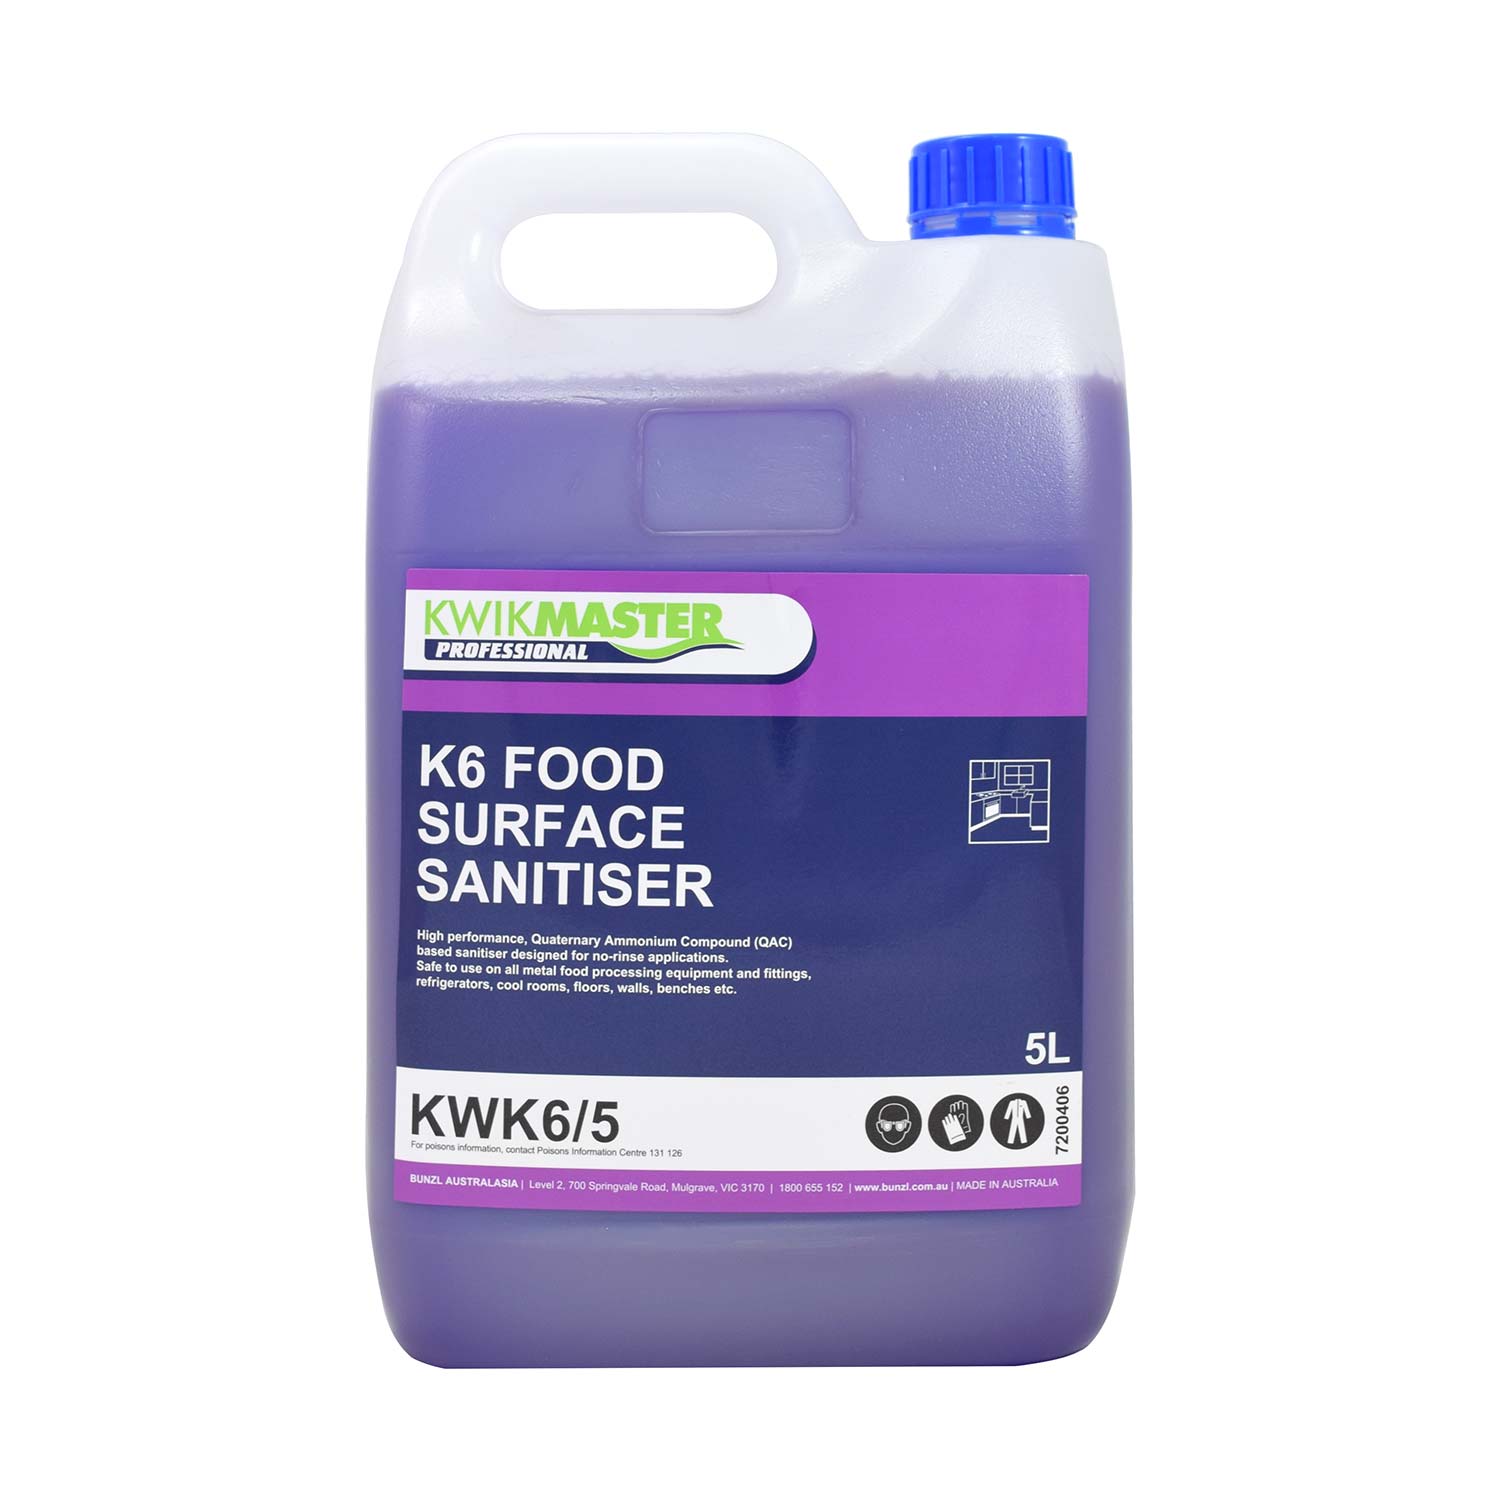 Kwikmaster Professional Kwikmaster Professional K6 Food Surface Sanitiser 5L - Each Cleaning & Washroom Supplies  